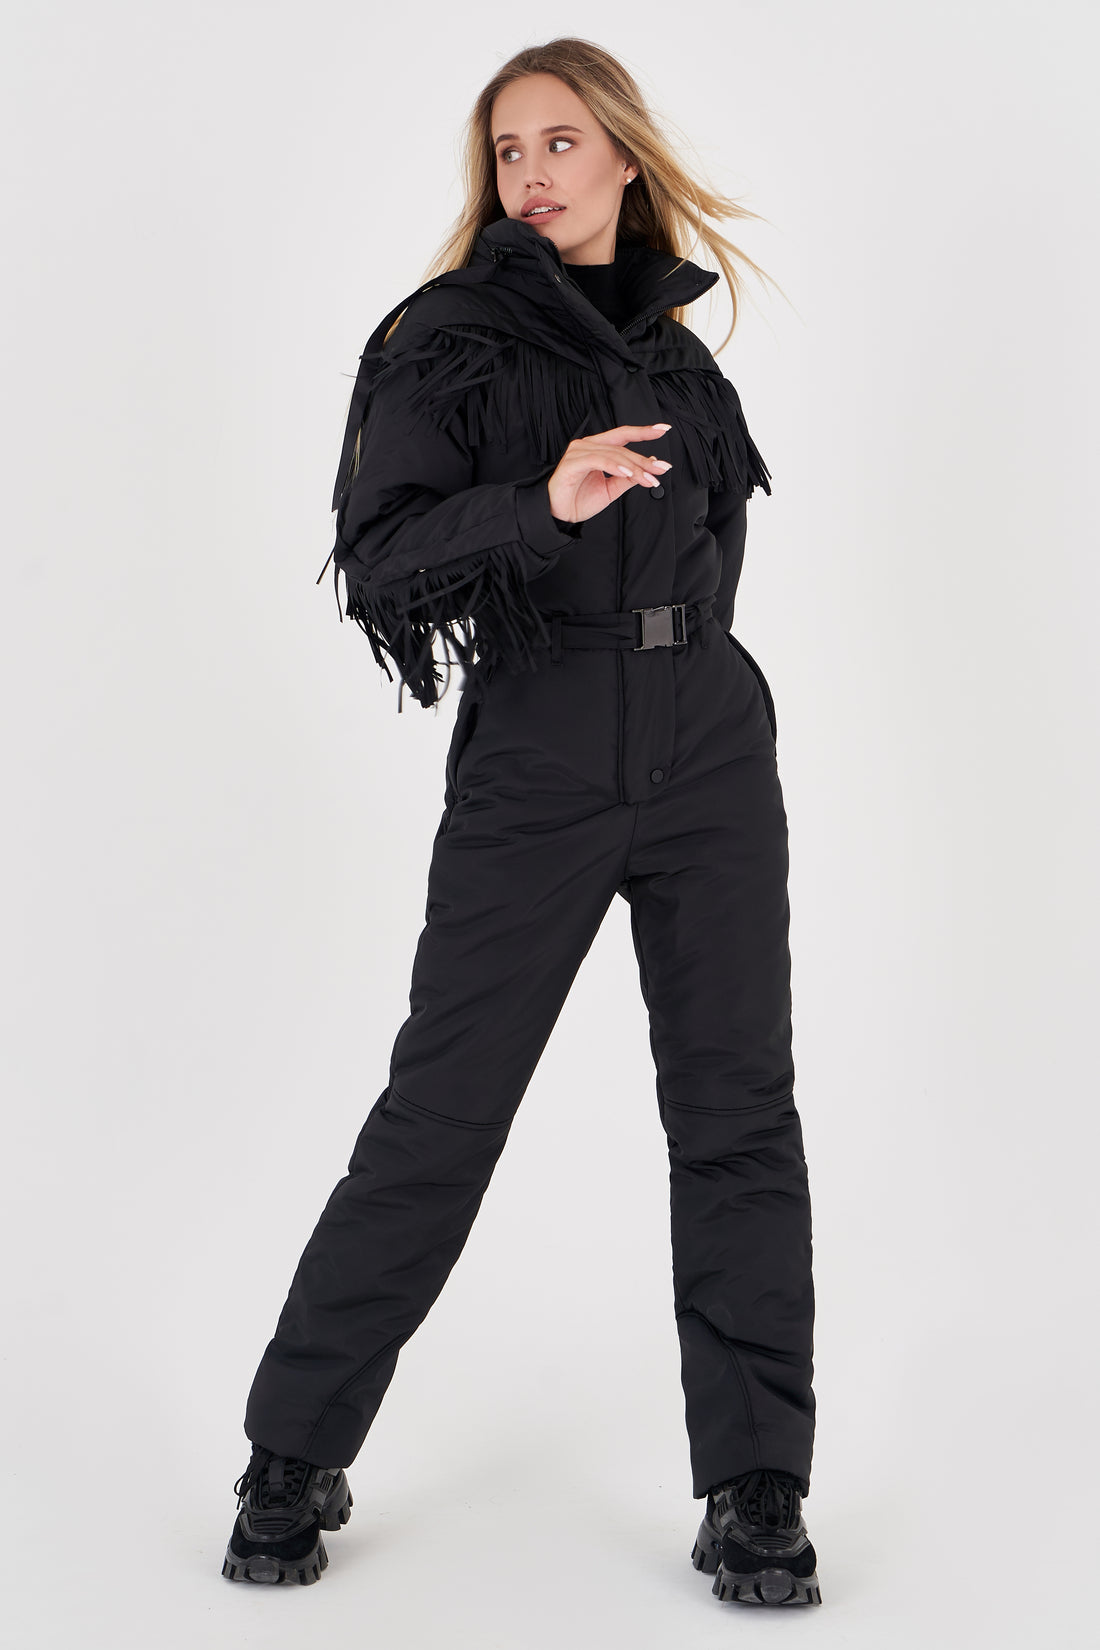 Base layer black jumpsuit - Thermal underwear black one piece